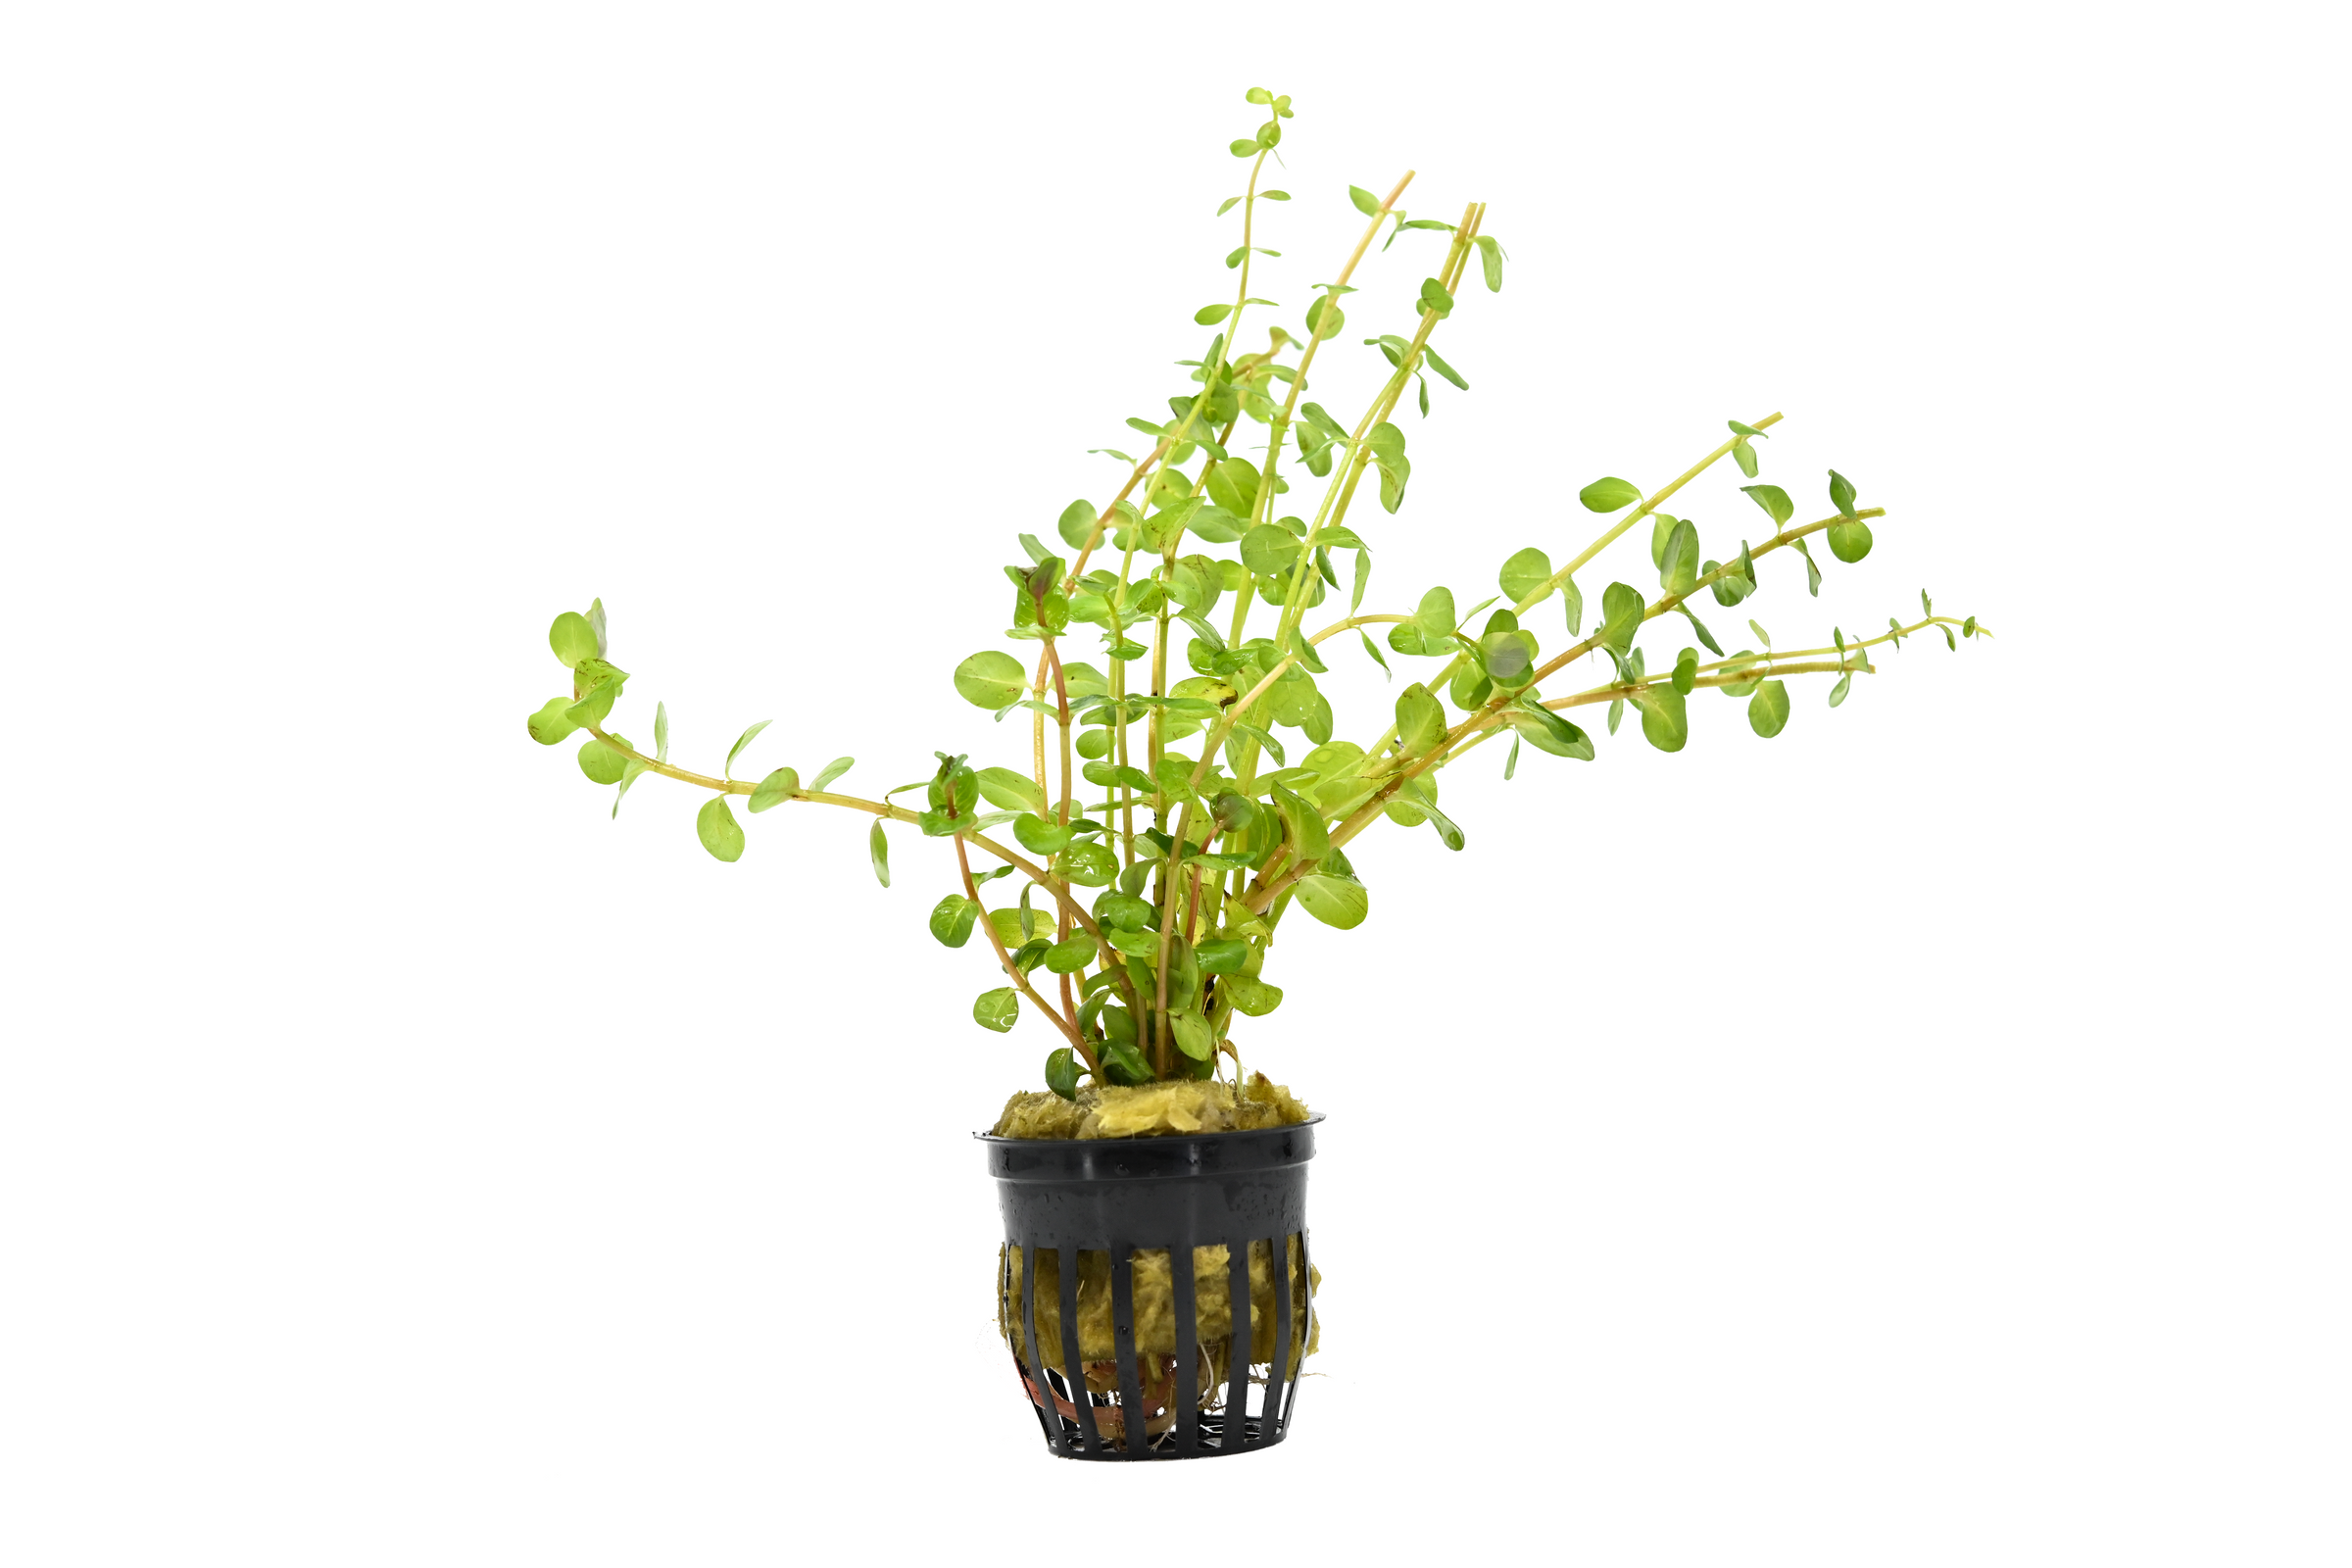 Rotala Indica is a popular aquatic stem plant in live plants